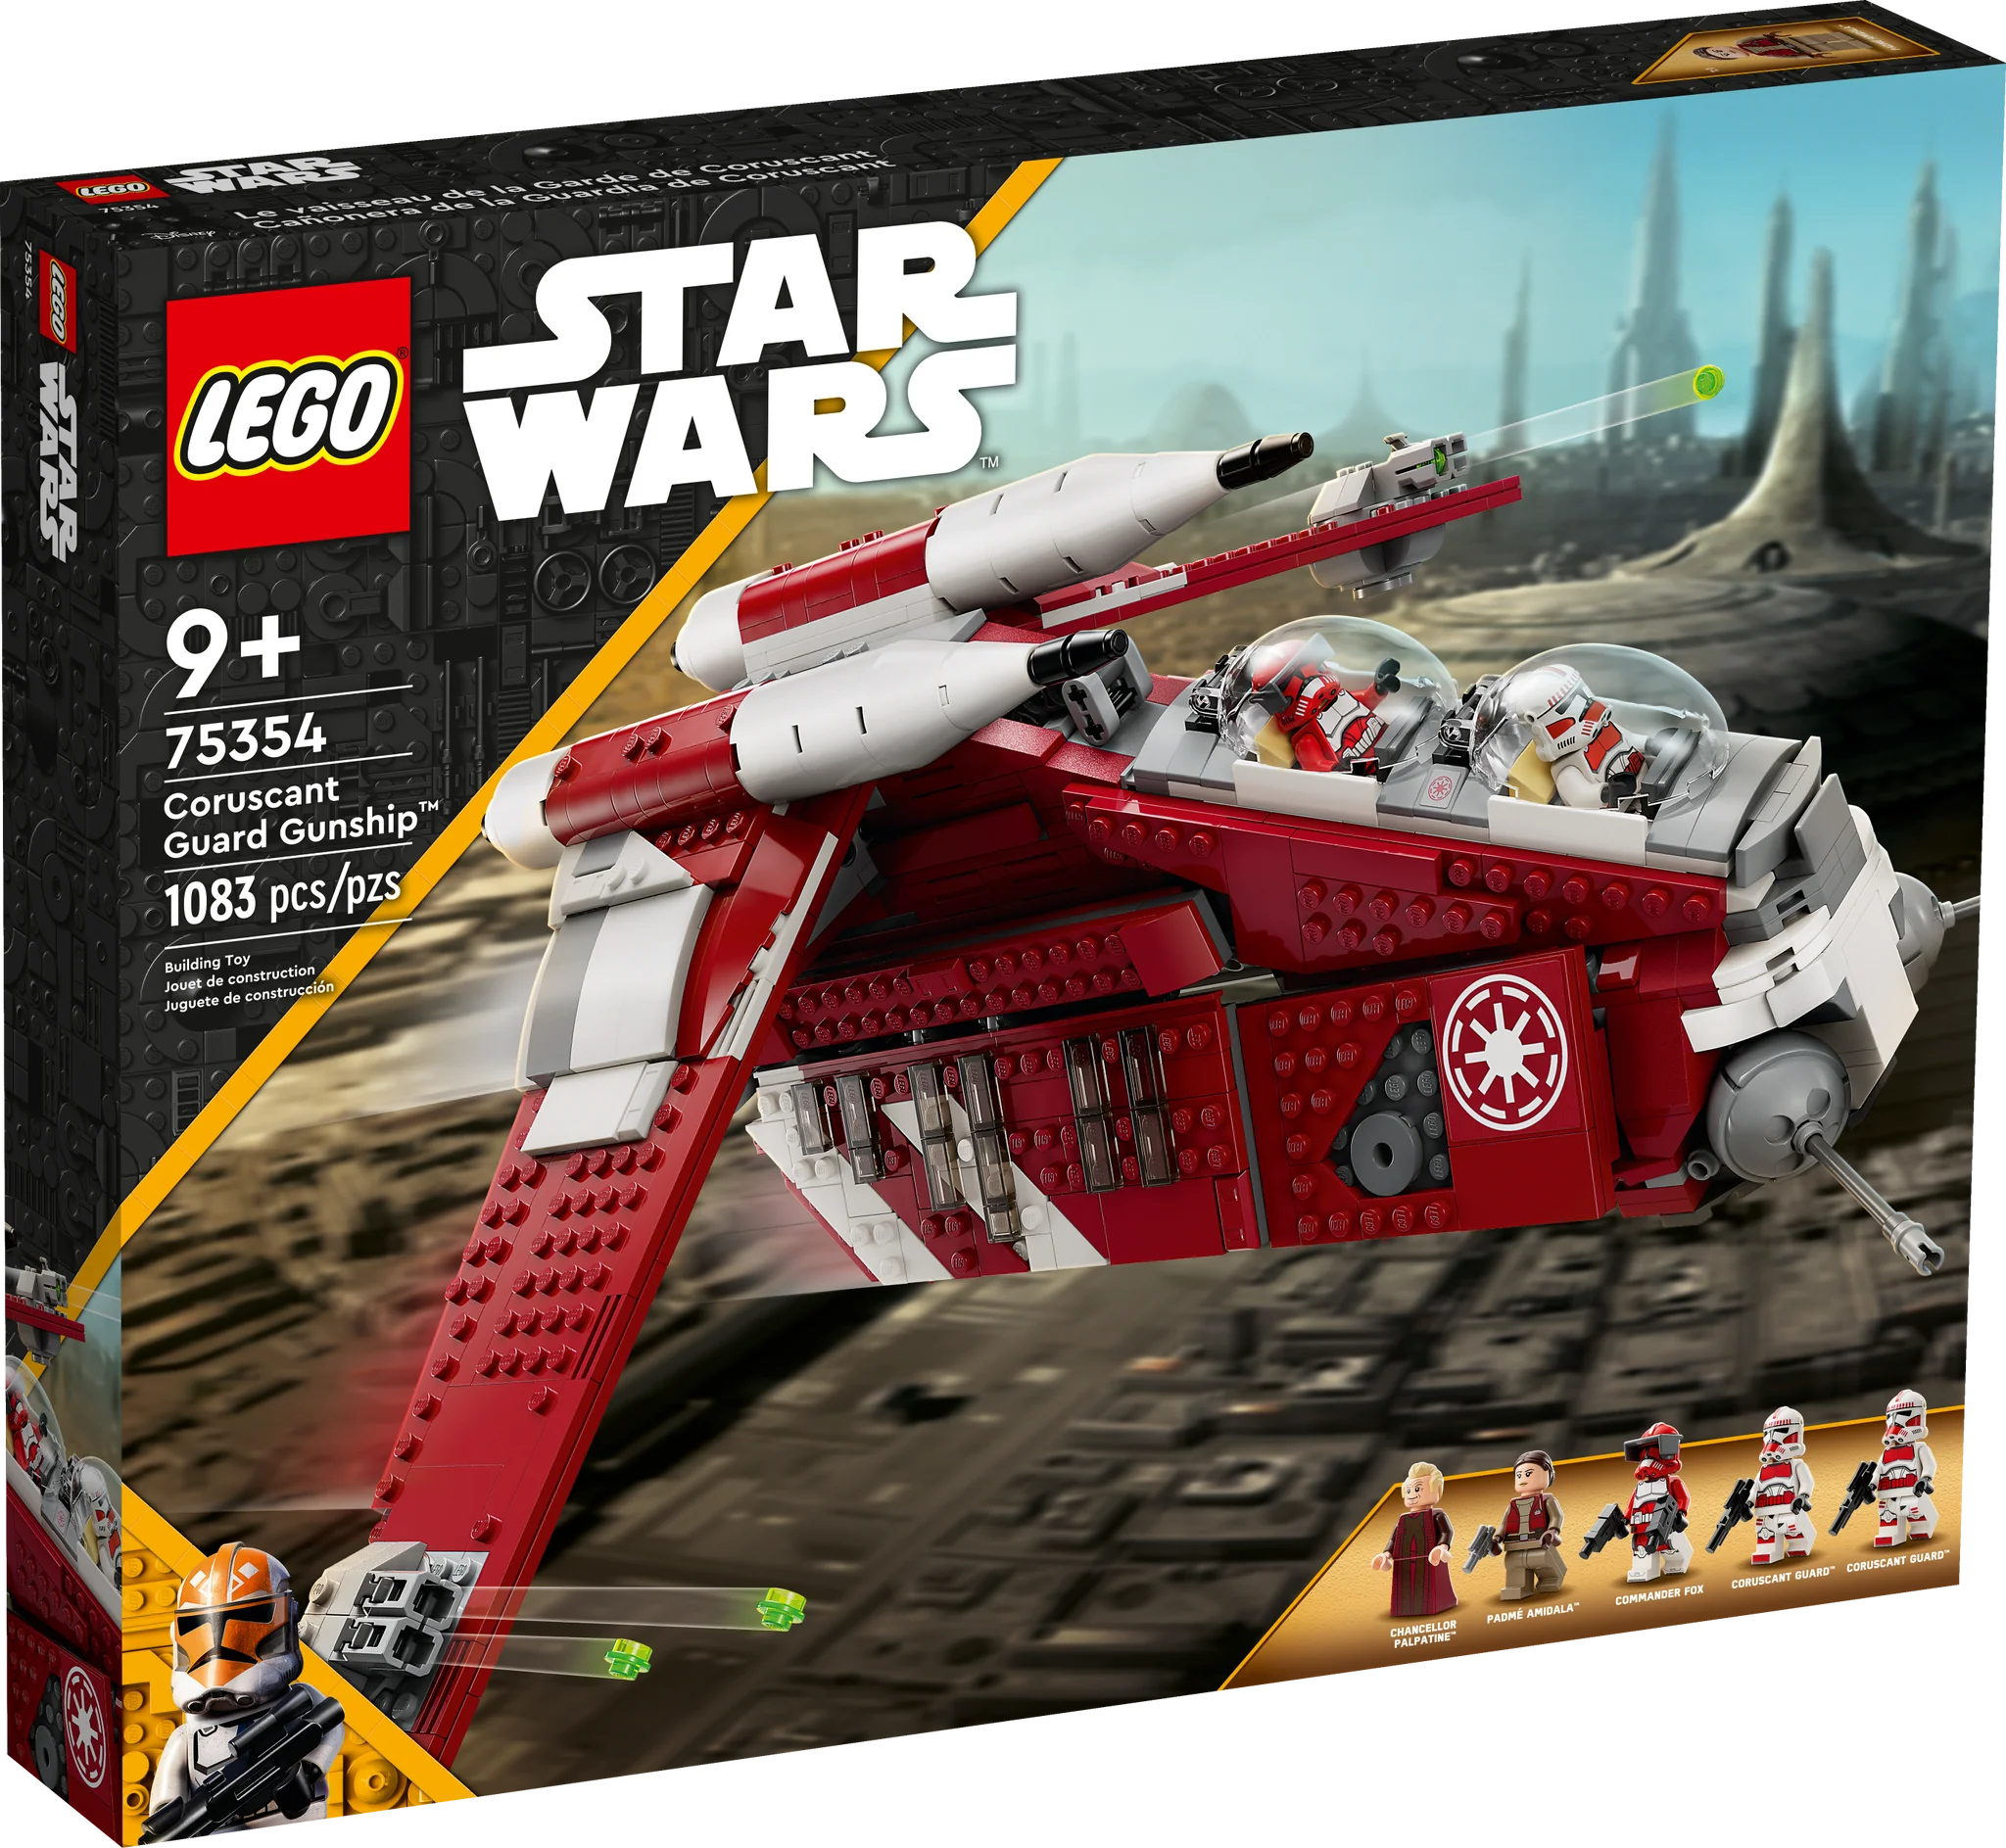 LEGO Star Wars Coruscant Guard Gunship Building Set (75354)